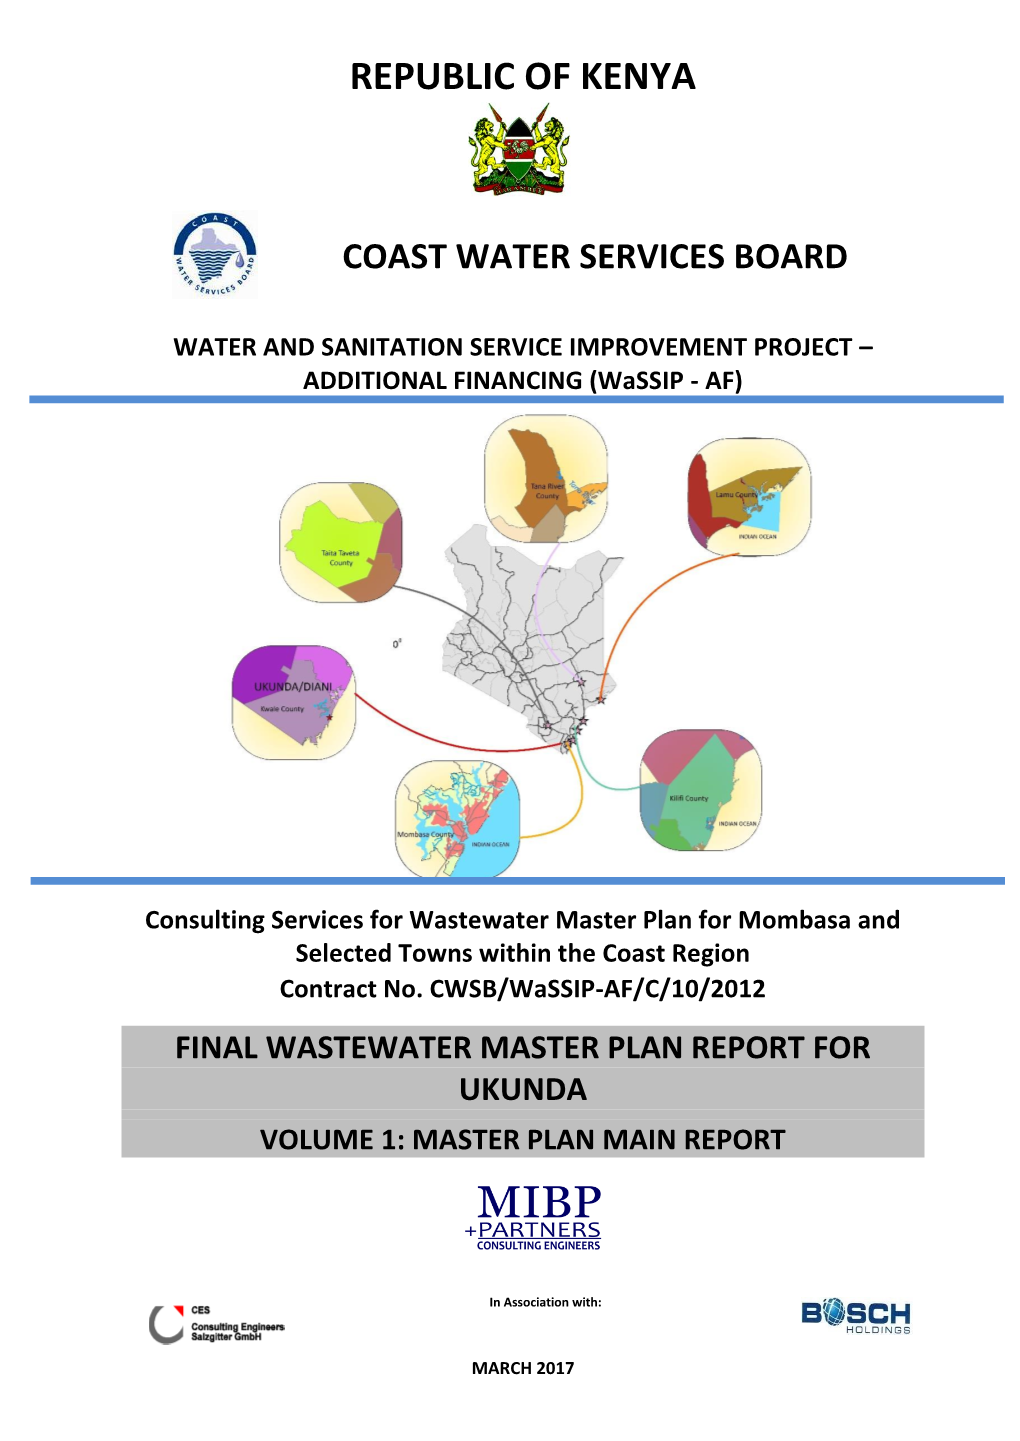 Wastewater Master Plan Report for Ukunda